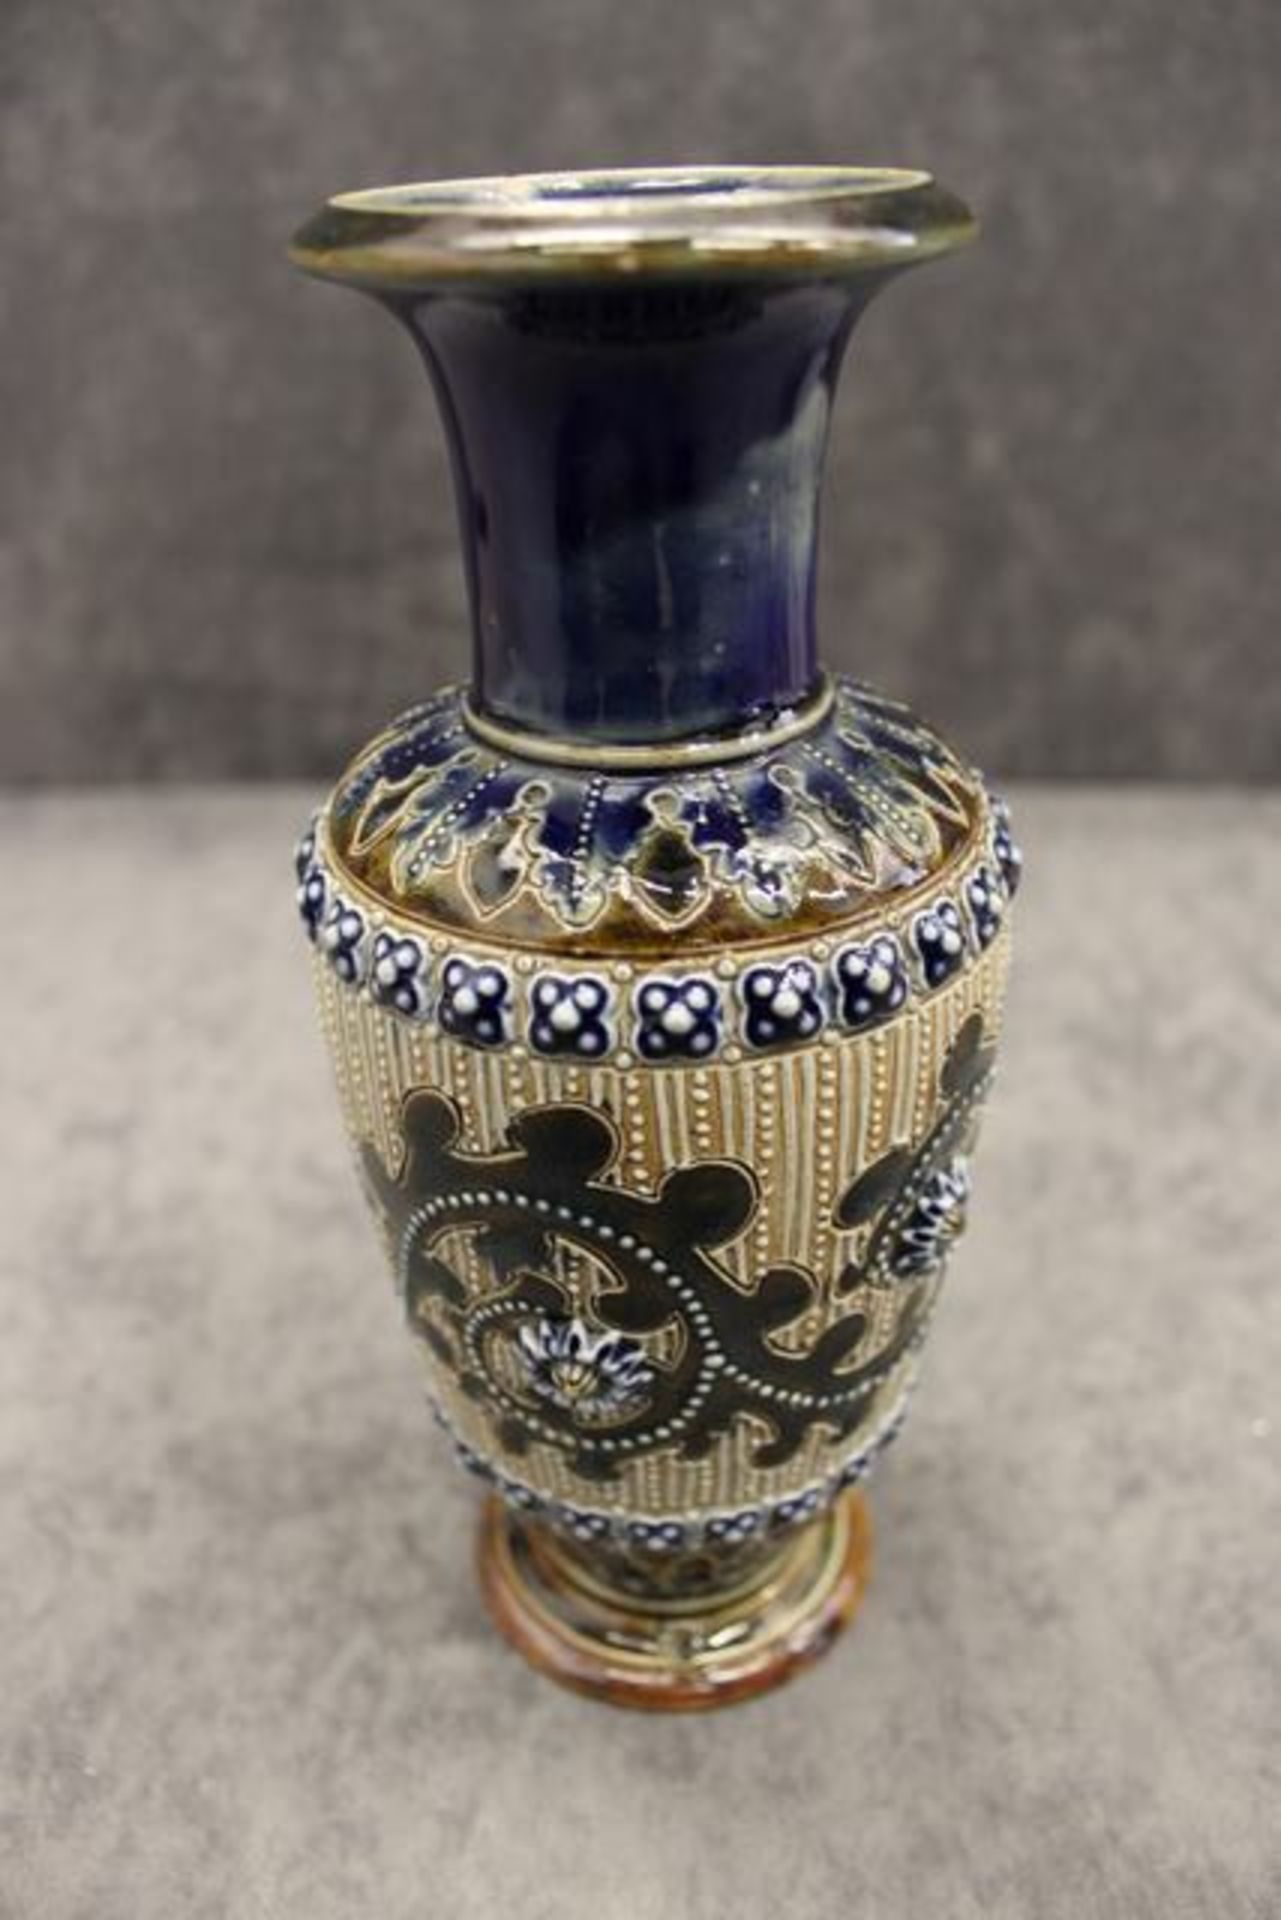 George Tinworth (British, 1843 - 1913) for Doulton Lambeth stoneware vase, dated 1876, scrolling